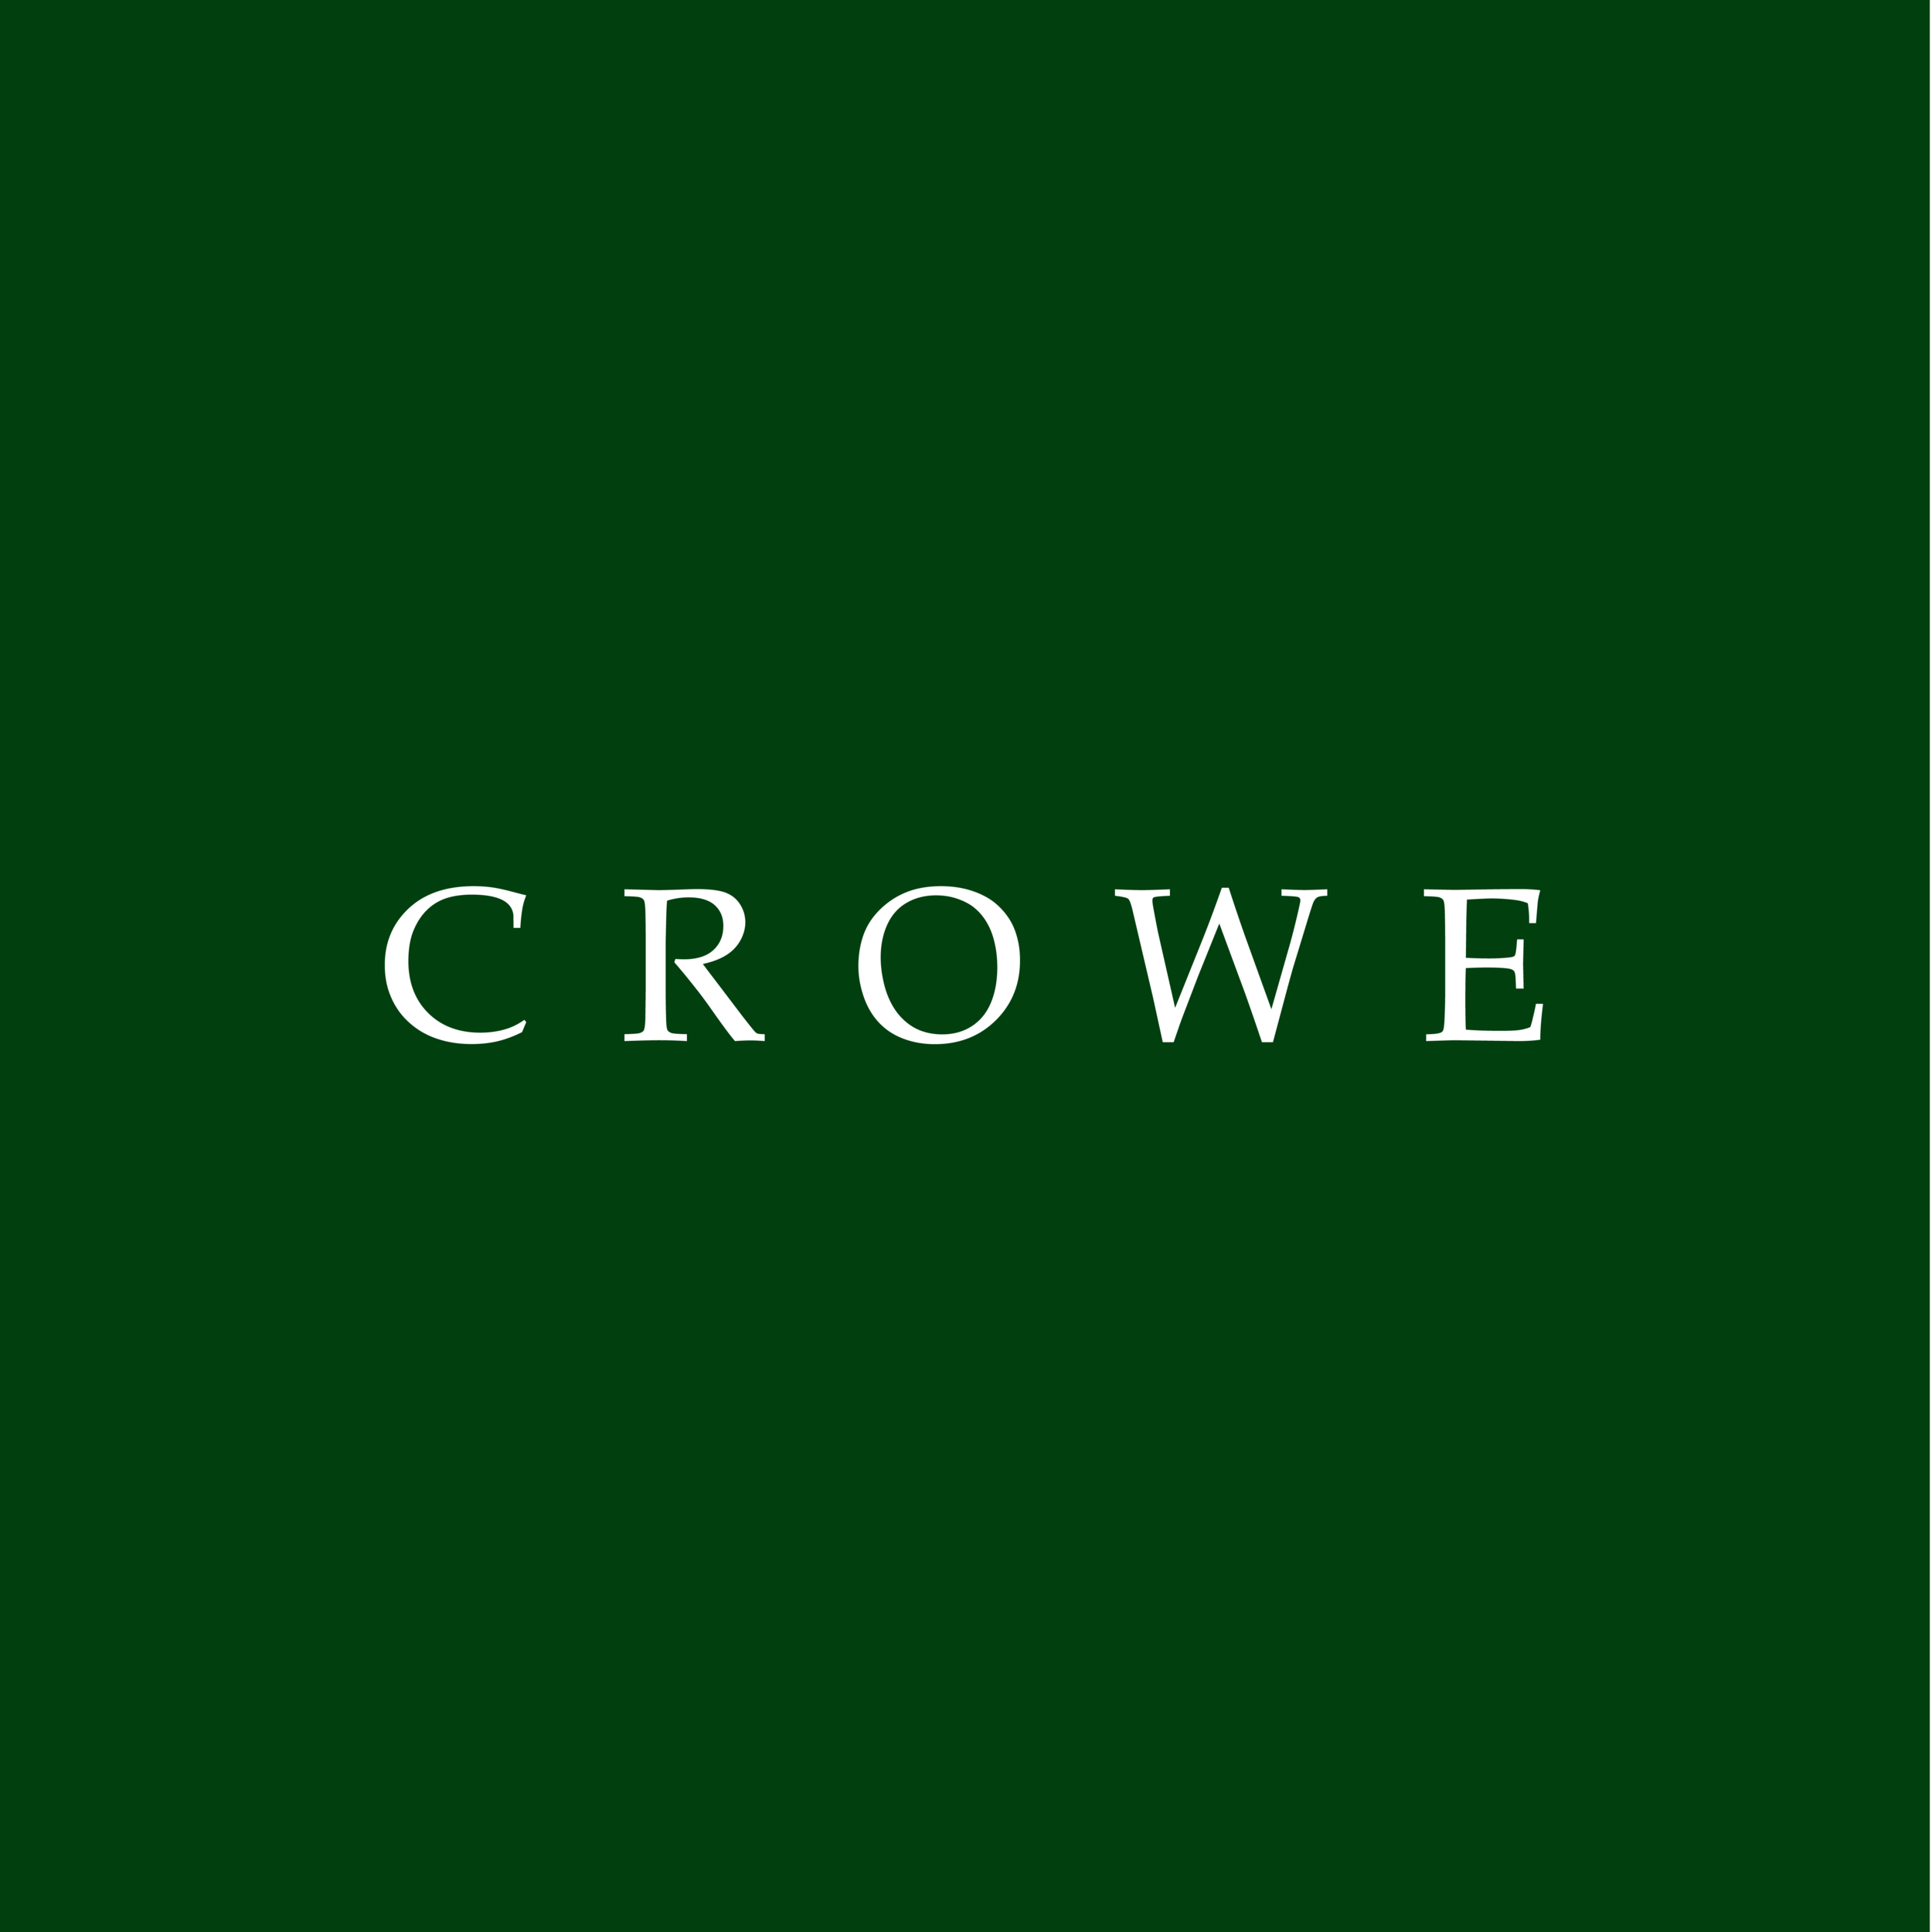 Crowe - Construction Management, General Contractor, Design Build.